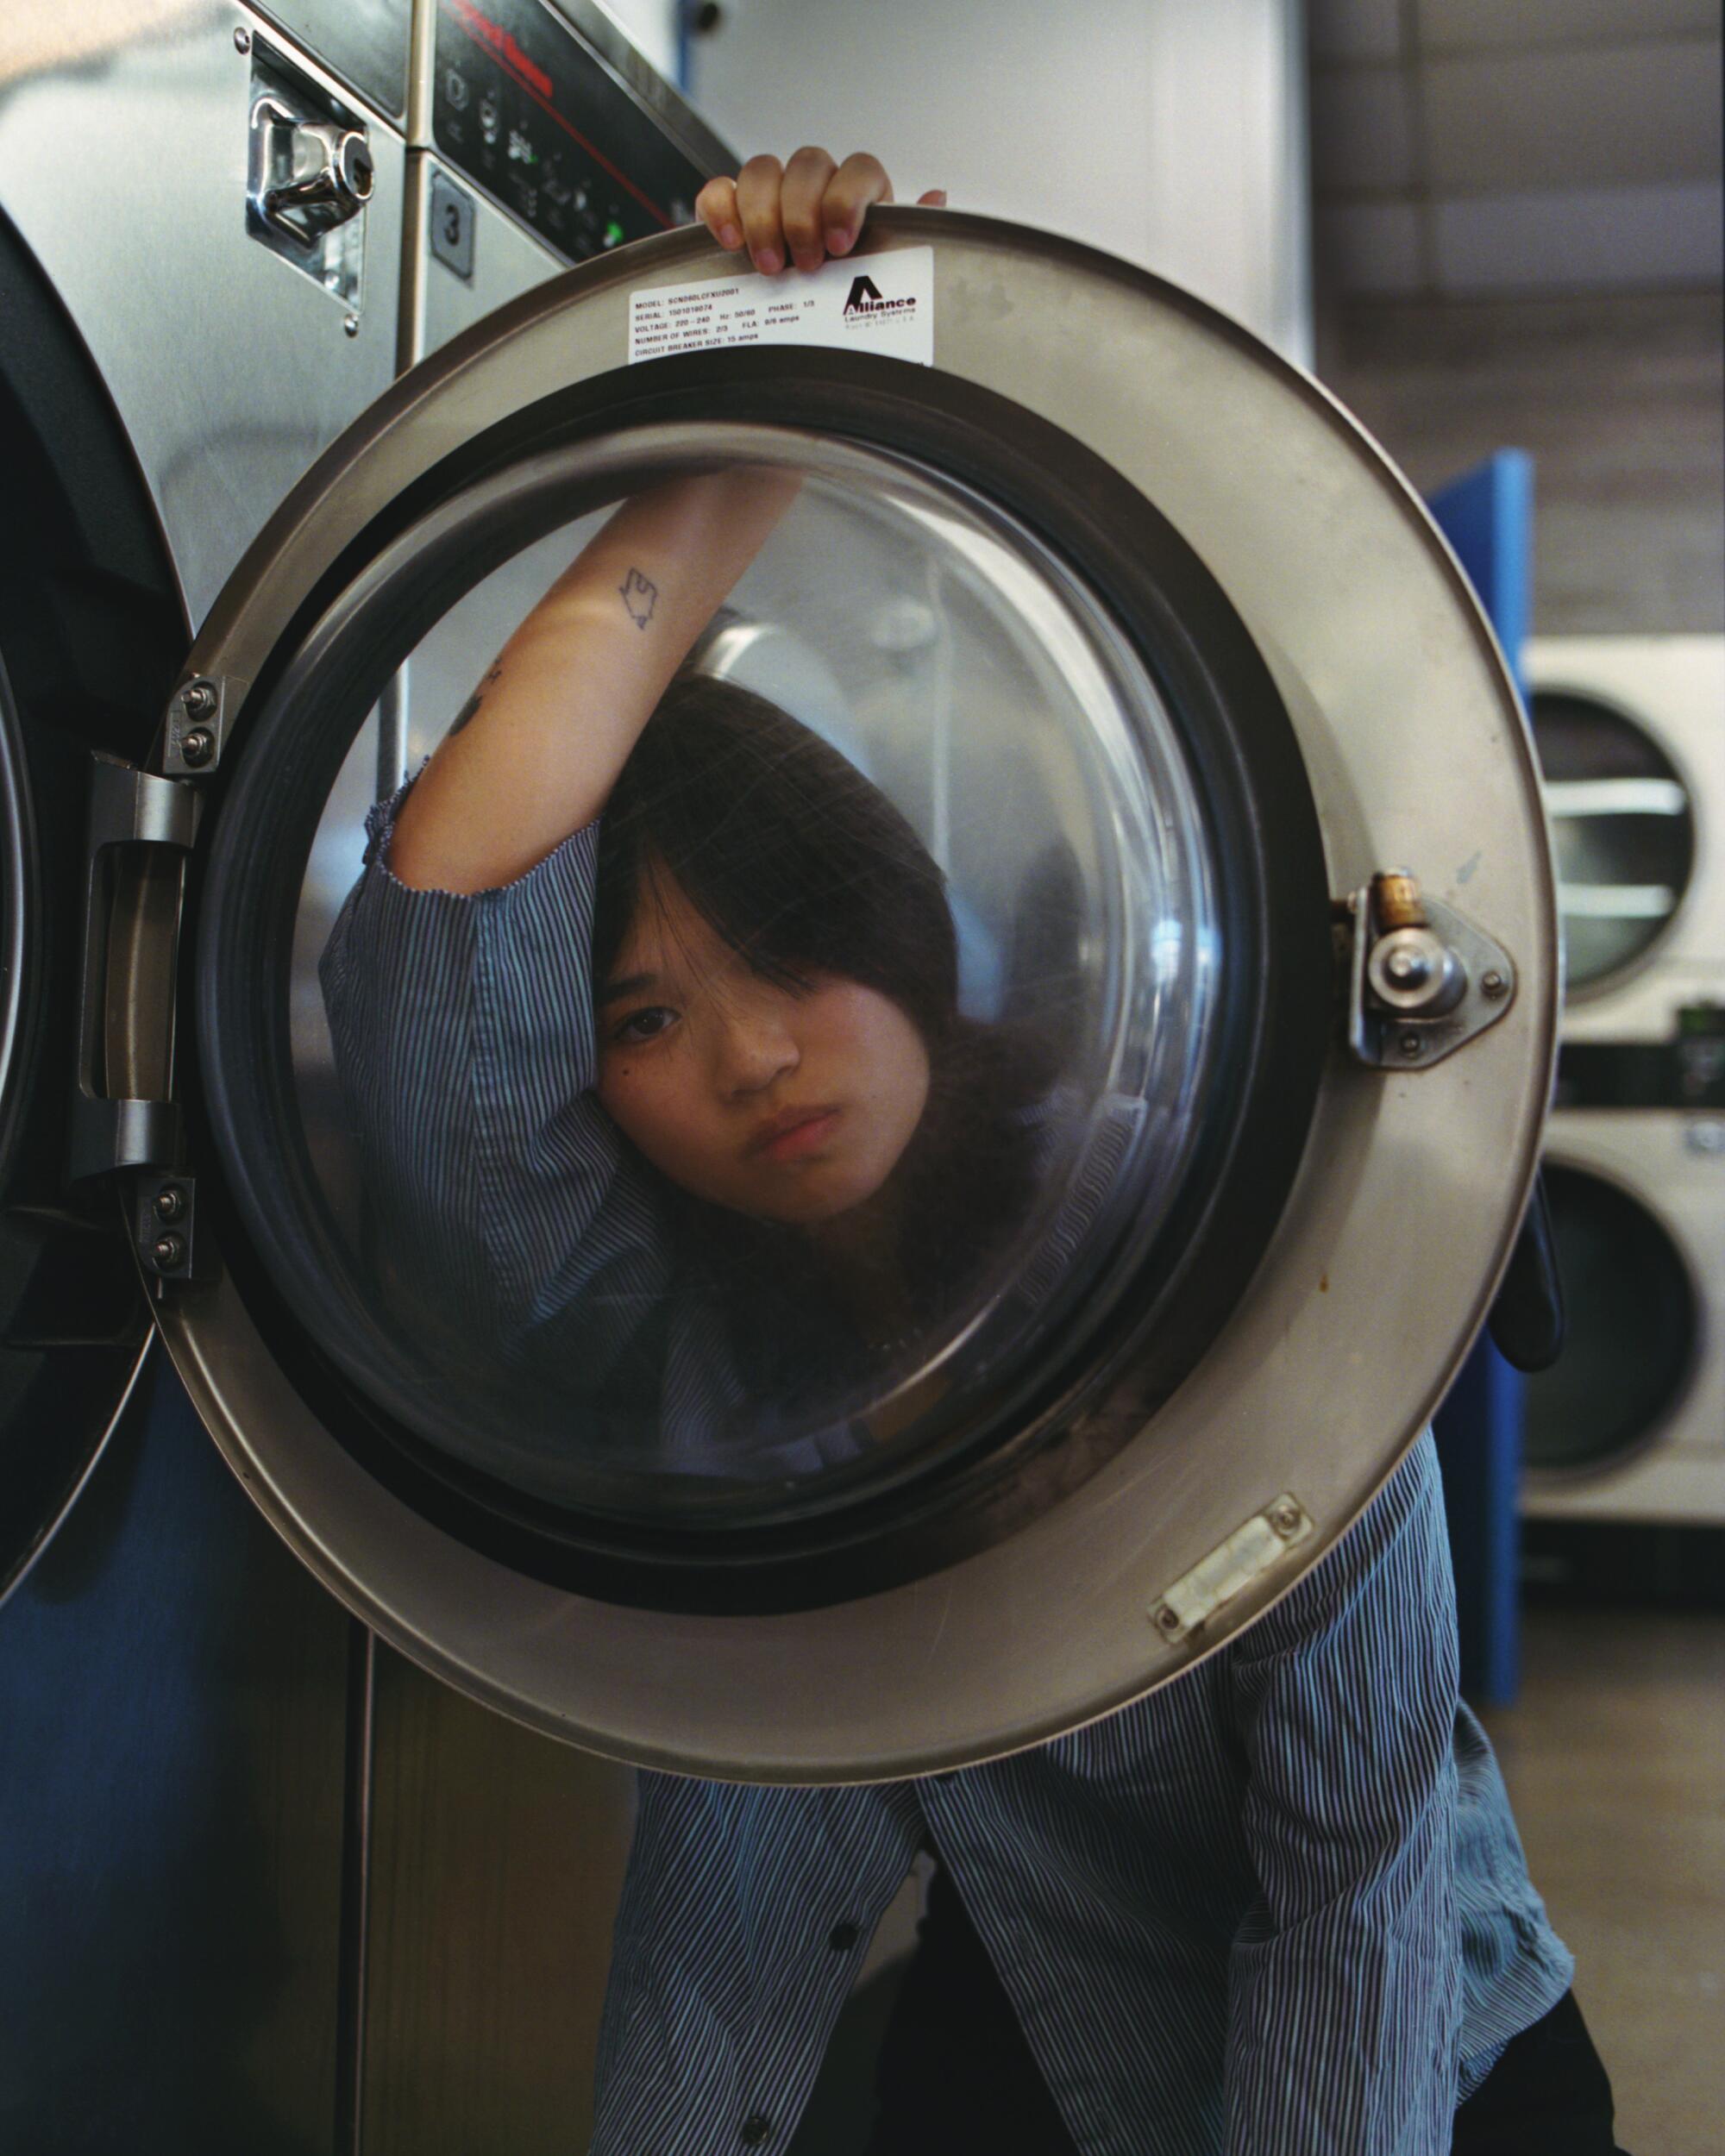 A woman is photographed looking through an open dryer door.